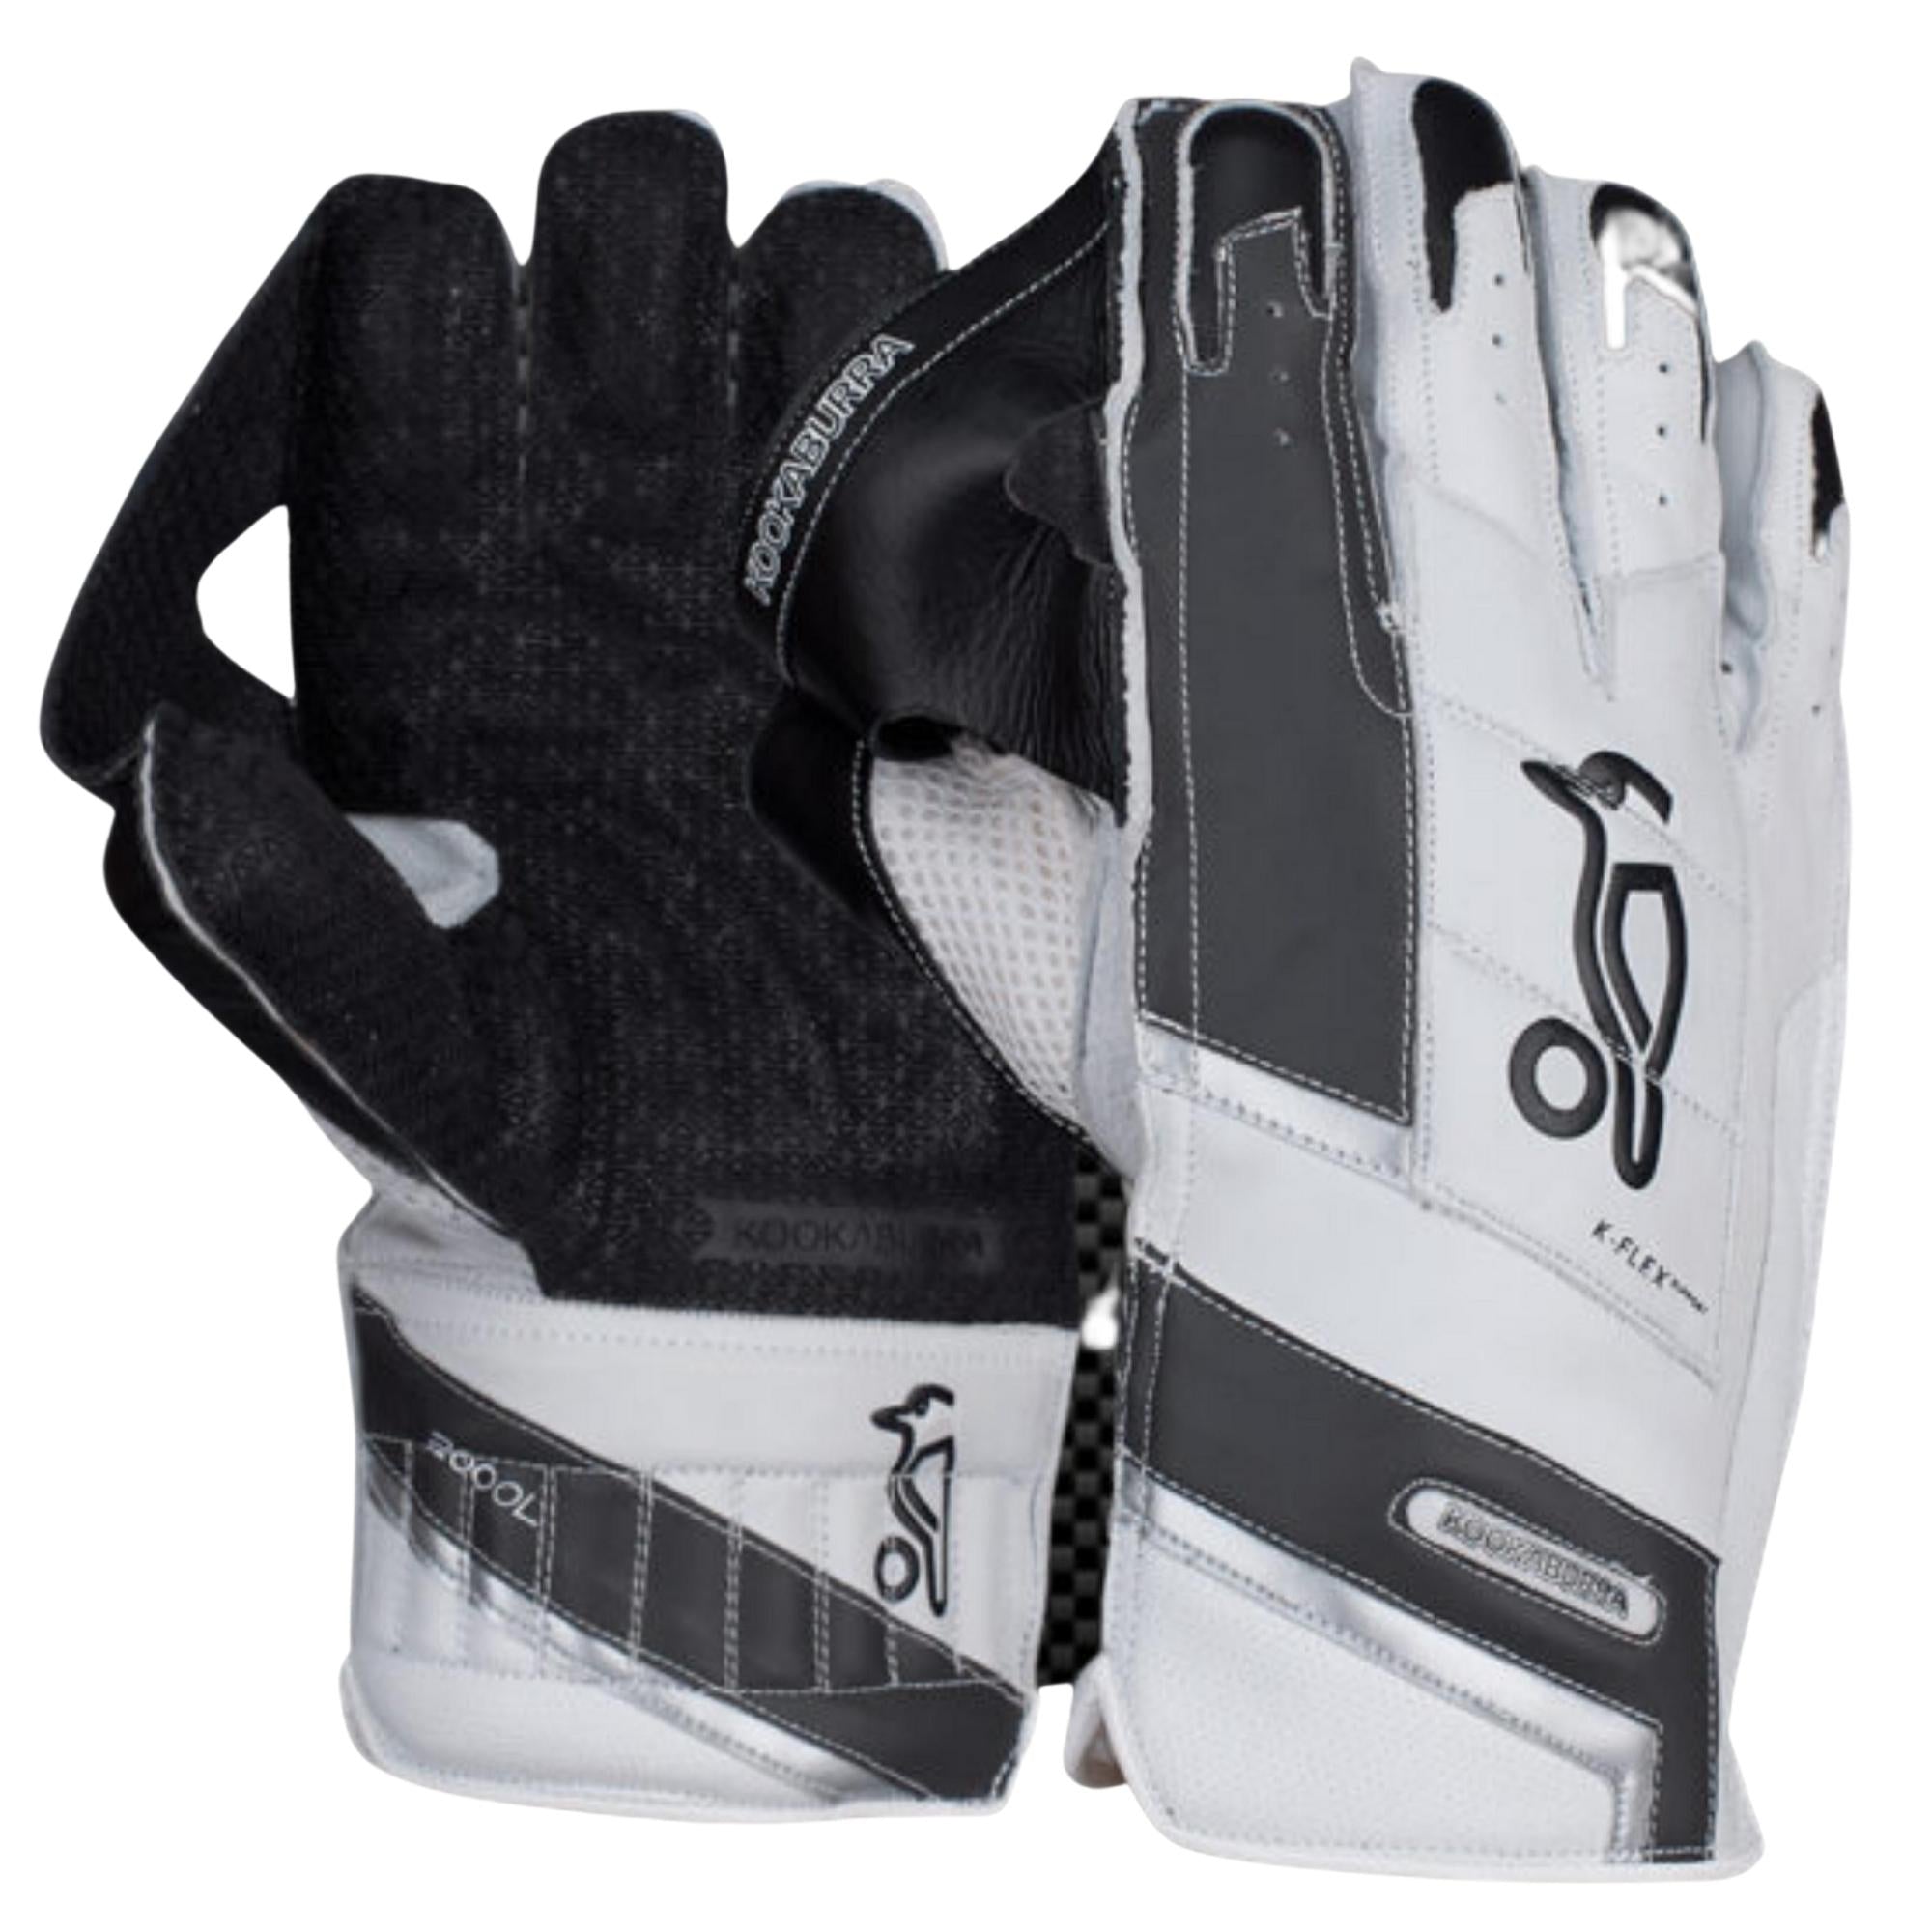 Kookaburra Wicket Keeping Gloves 1200L